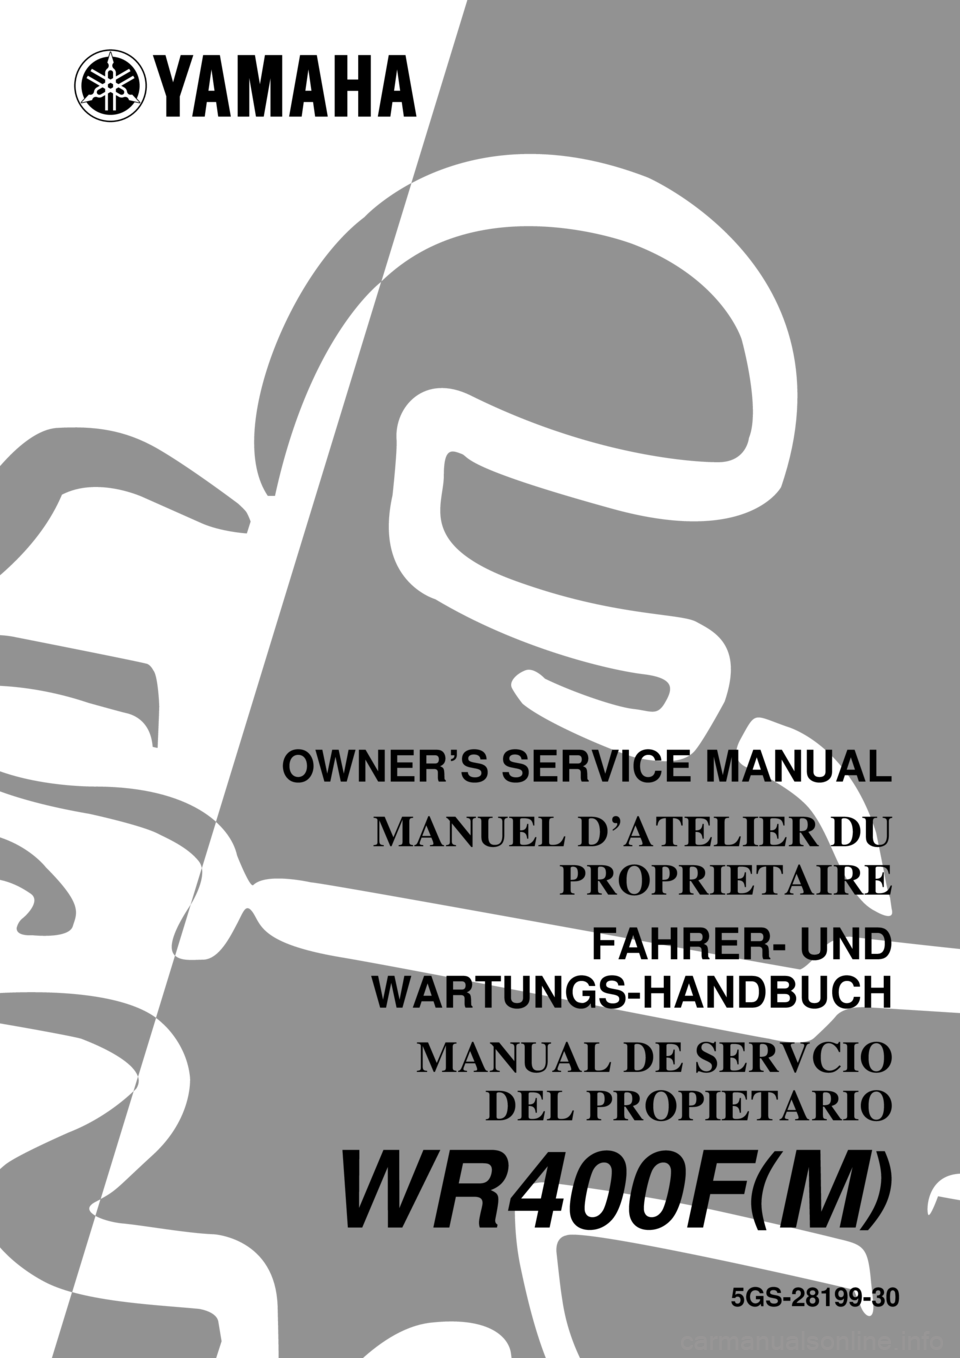 YAMAHA WR 400F 2000  Owners Manual 5GS-28199-30
WR400F(M)
OWNER’S SERVICE MANUAL
MANUEL D’ATELIER DU
PROPRIETAIRE
FAHRER- UND
WARTUNGS-HANDBUCH
MANUAL DE SERVCIO
DEL PROPIETARIO 